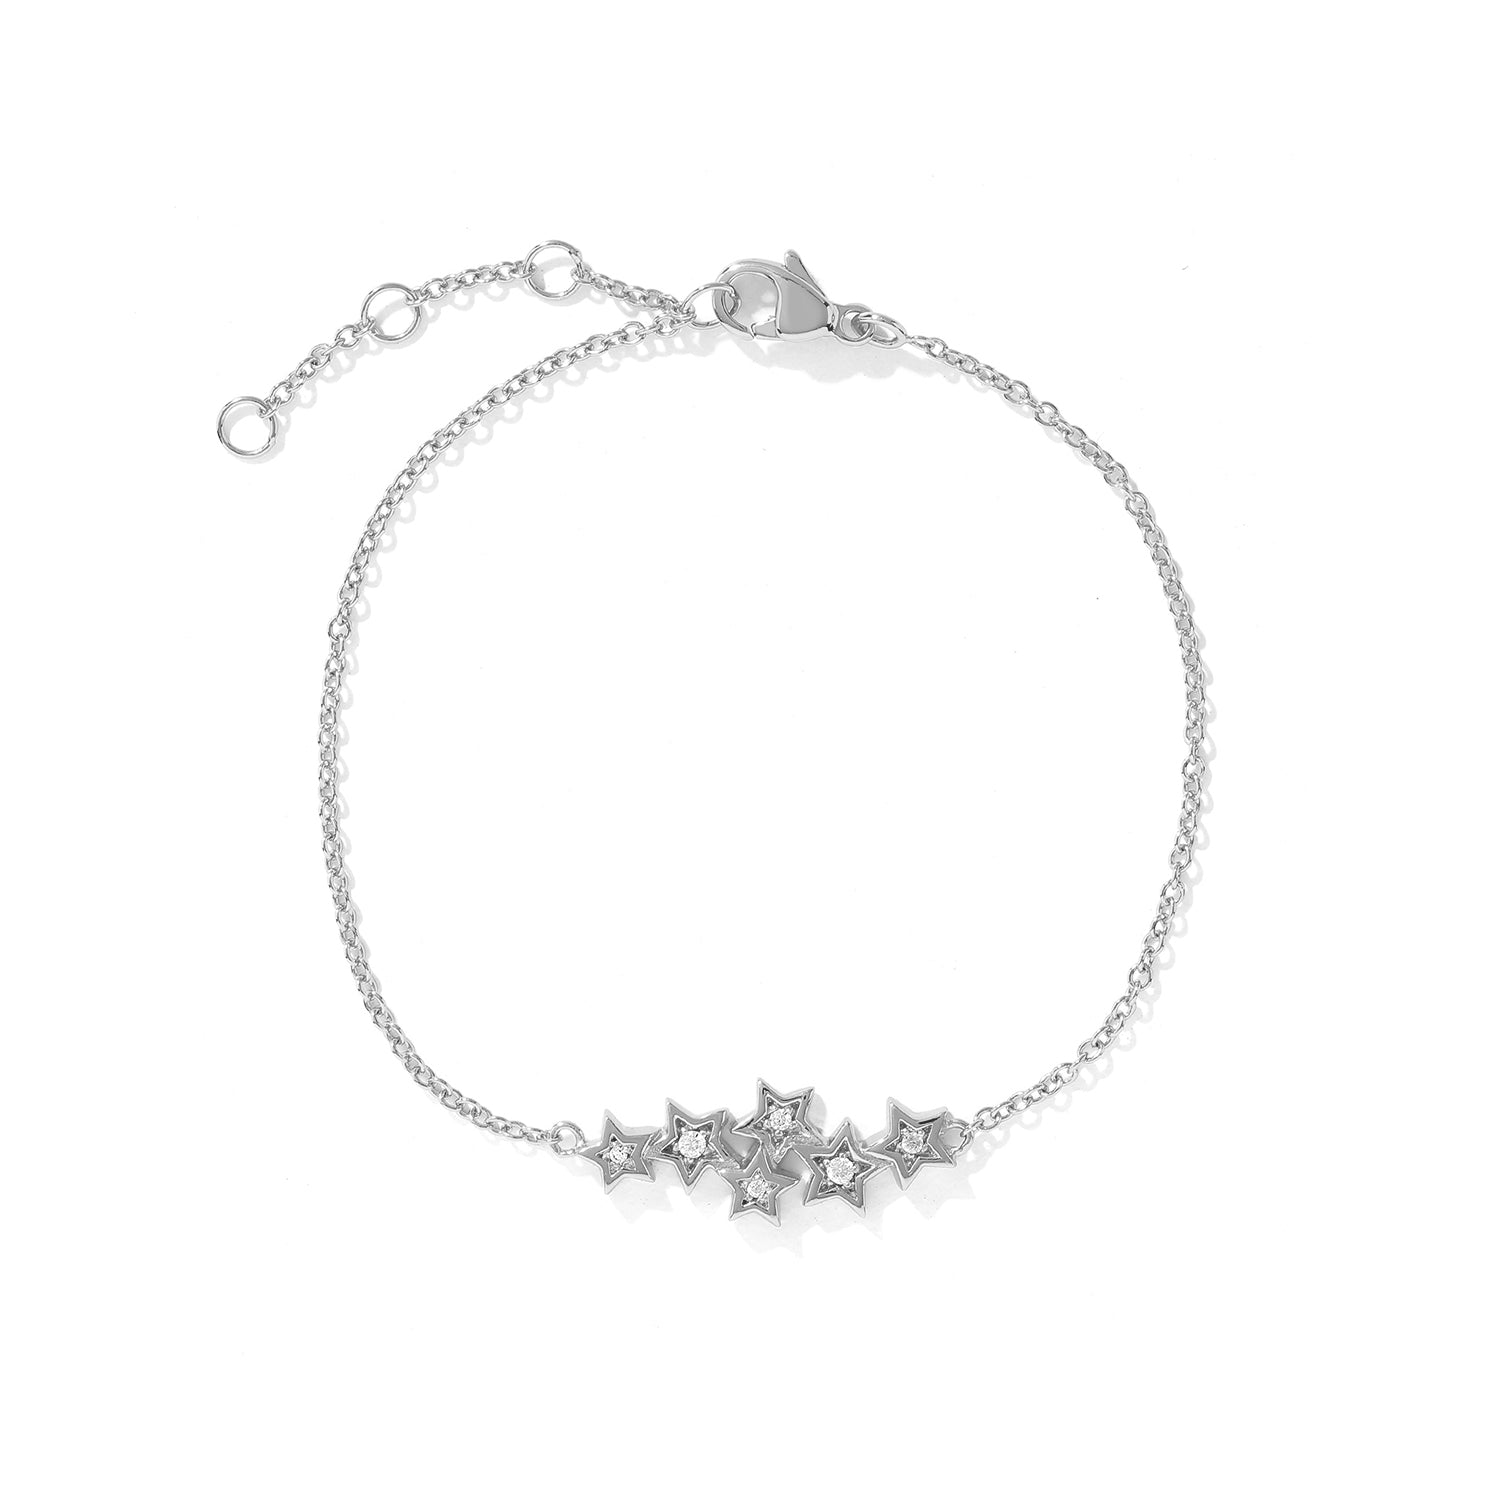 Elegant and dainty bracelet. 925 silver bracelet set with cubic zirconia stones.